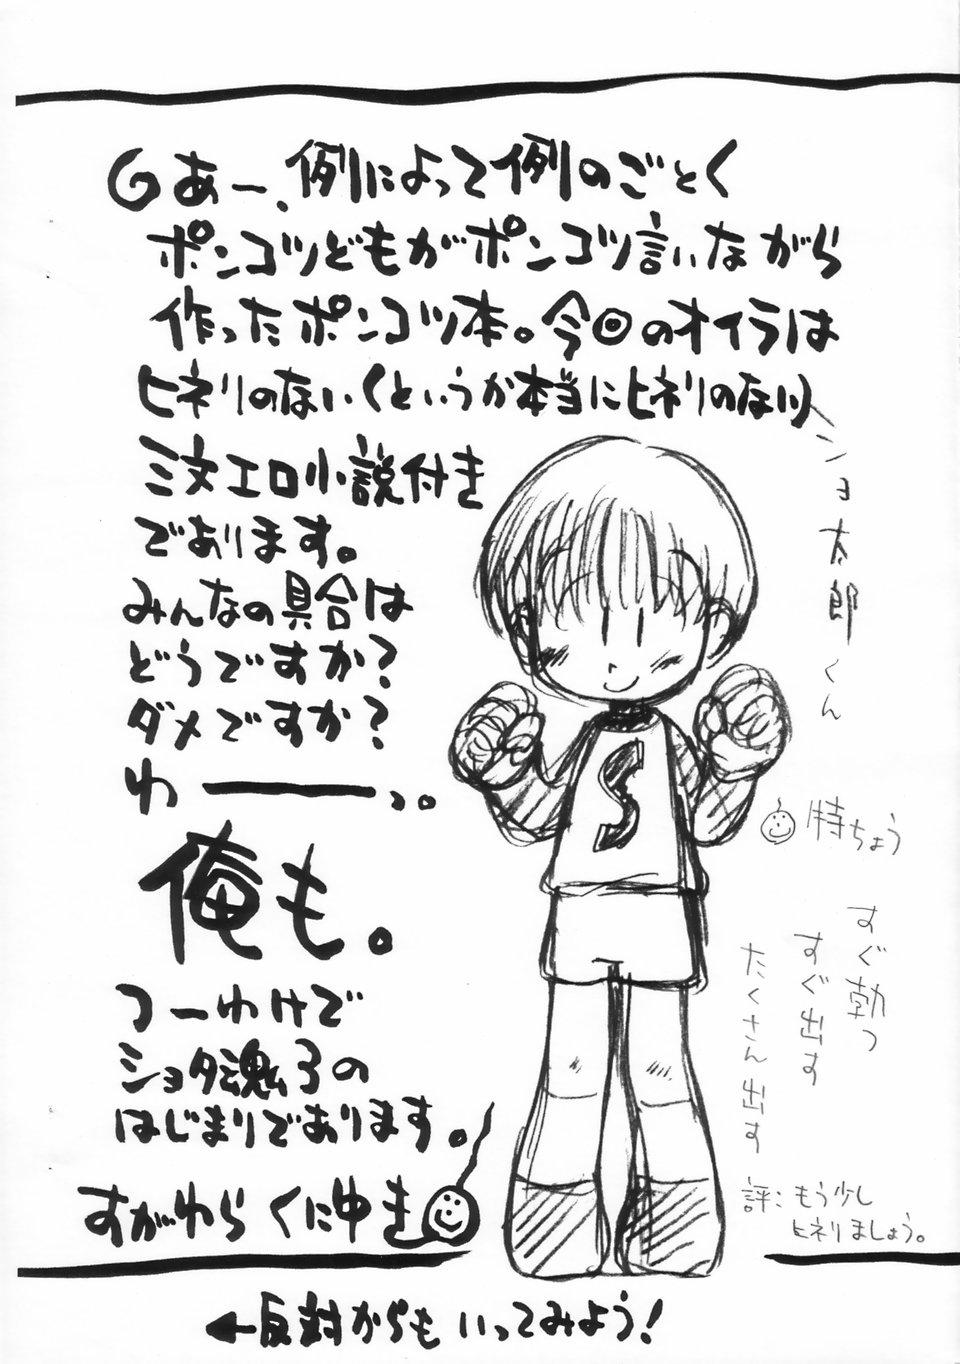 Toilet Shotatama III Step - Page 2